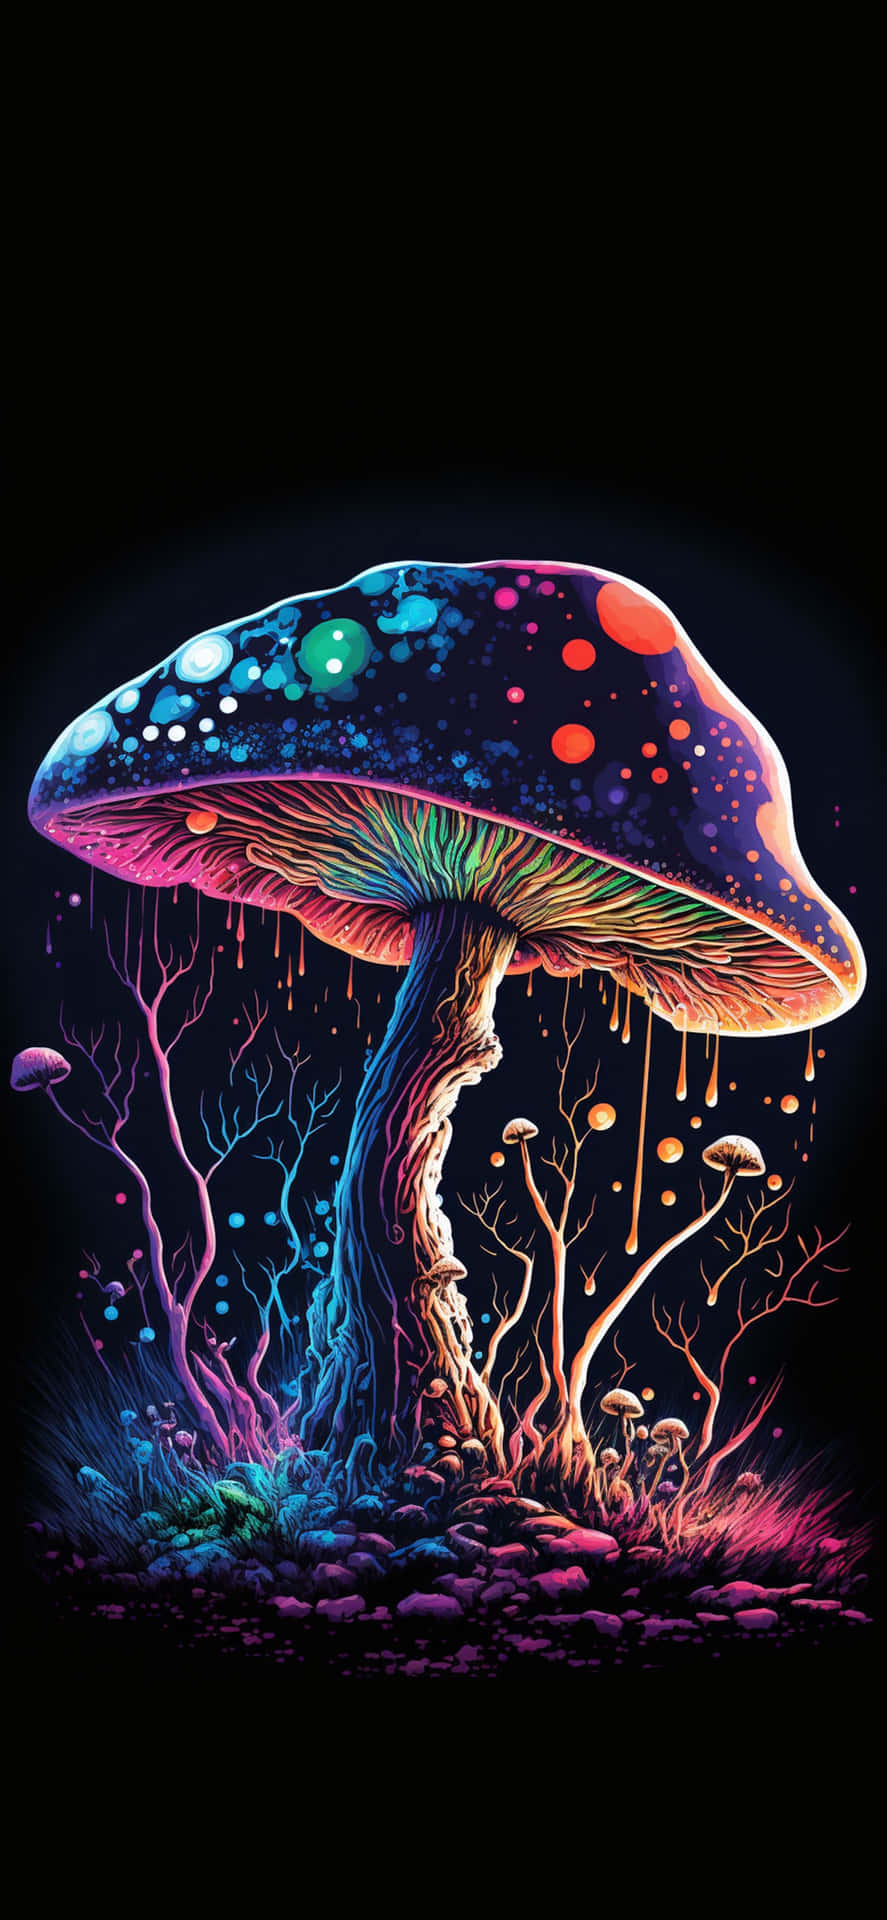 Vibrant Cosmic Mushroom Art Wallpaper